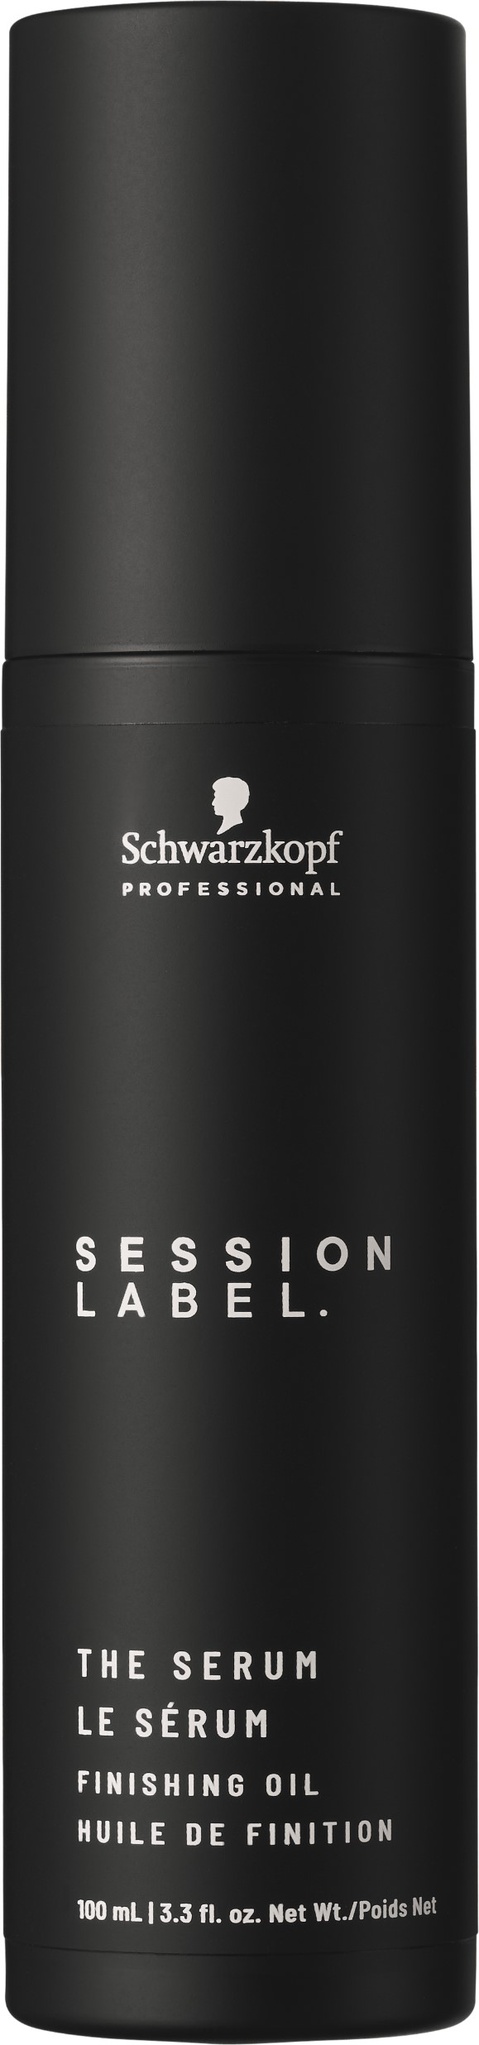 Schwarzkopf Professional Session Label The Serum